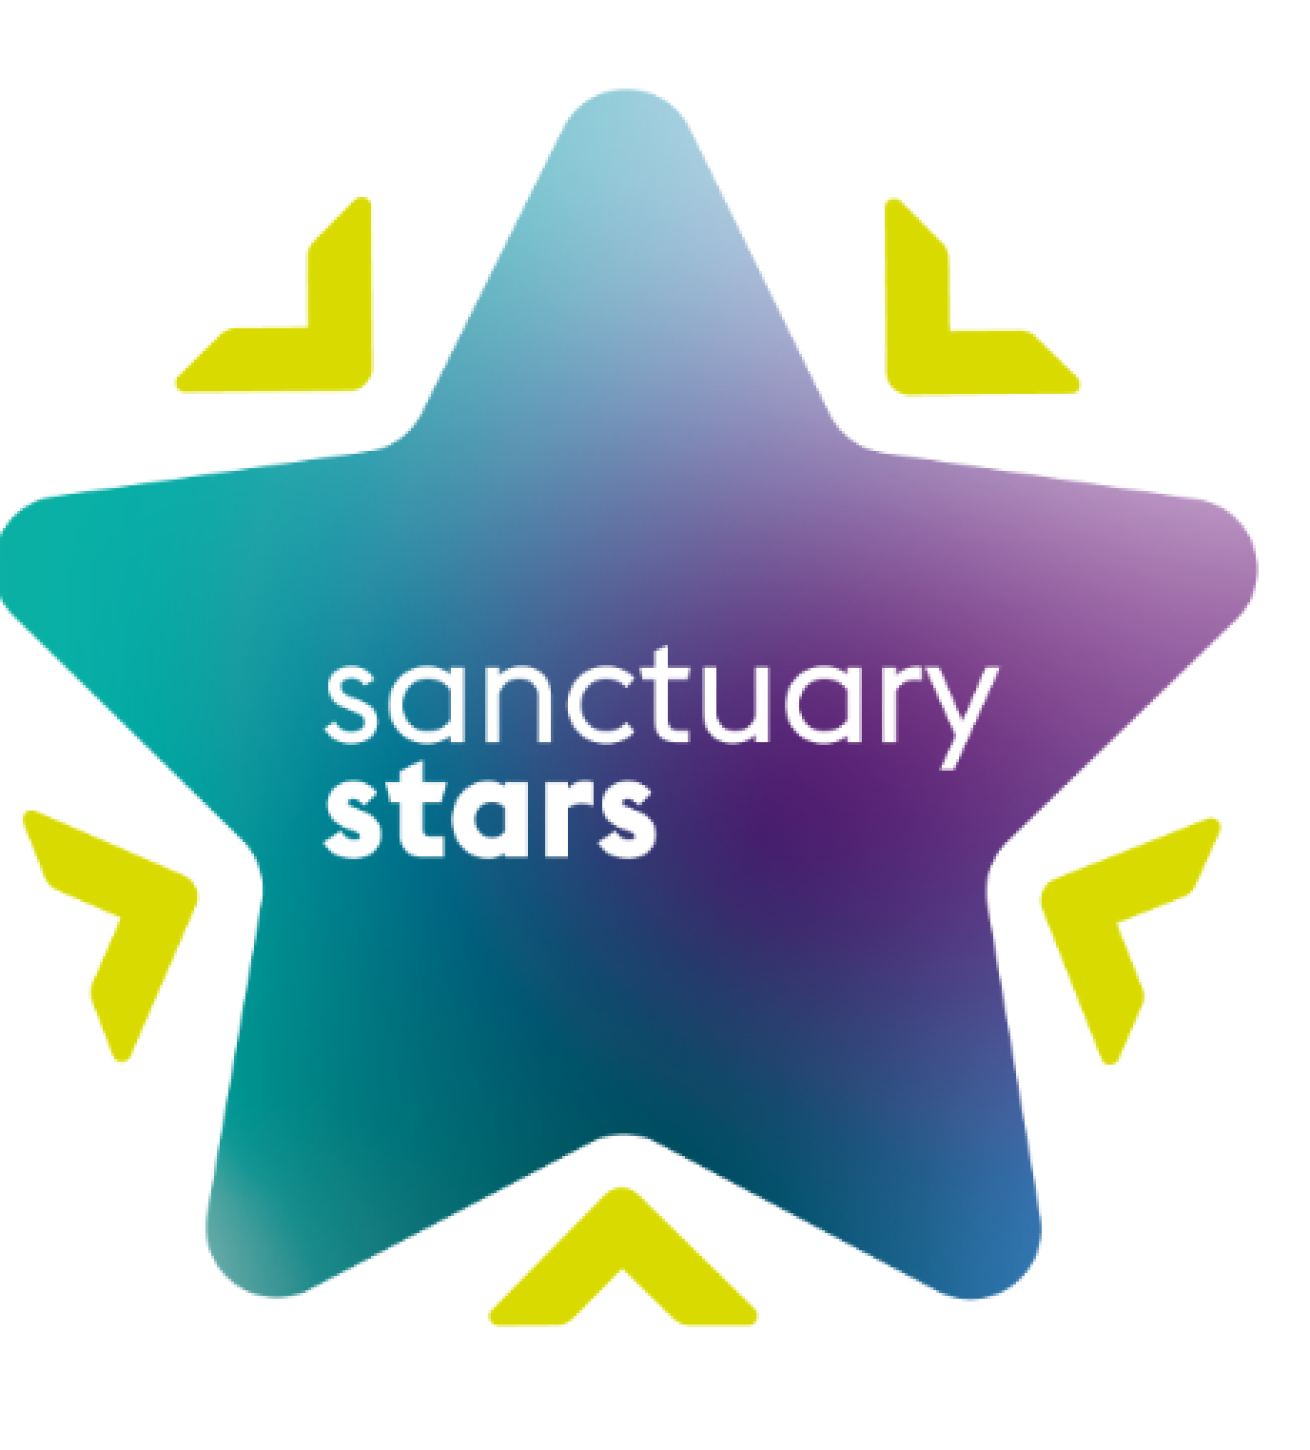 Sanctuary stars logo